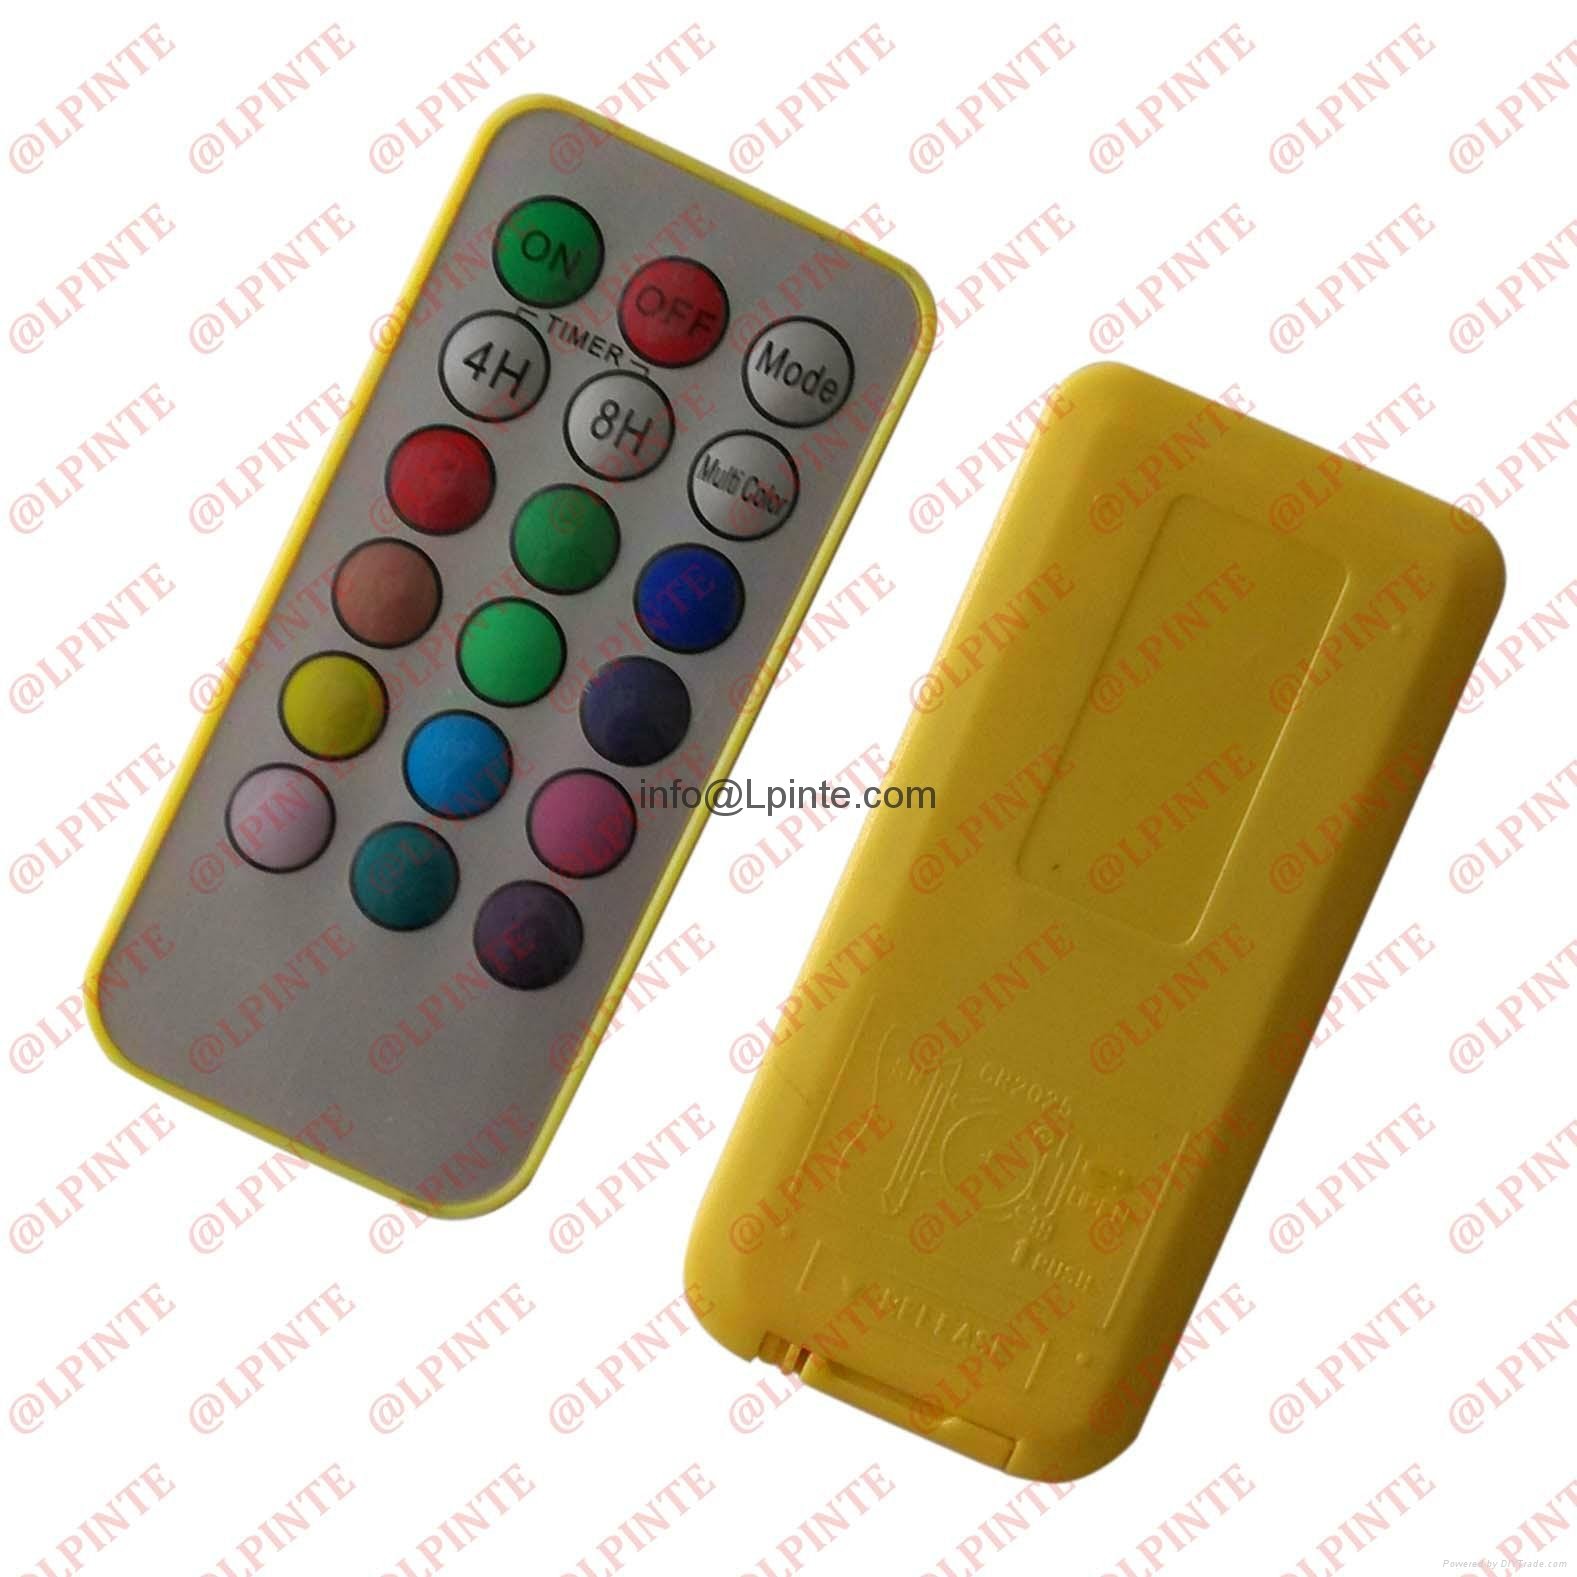 rgb light remote controller LEDライト用リモコン 5